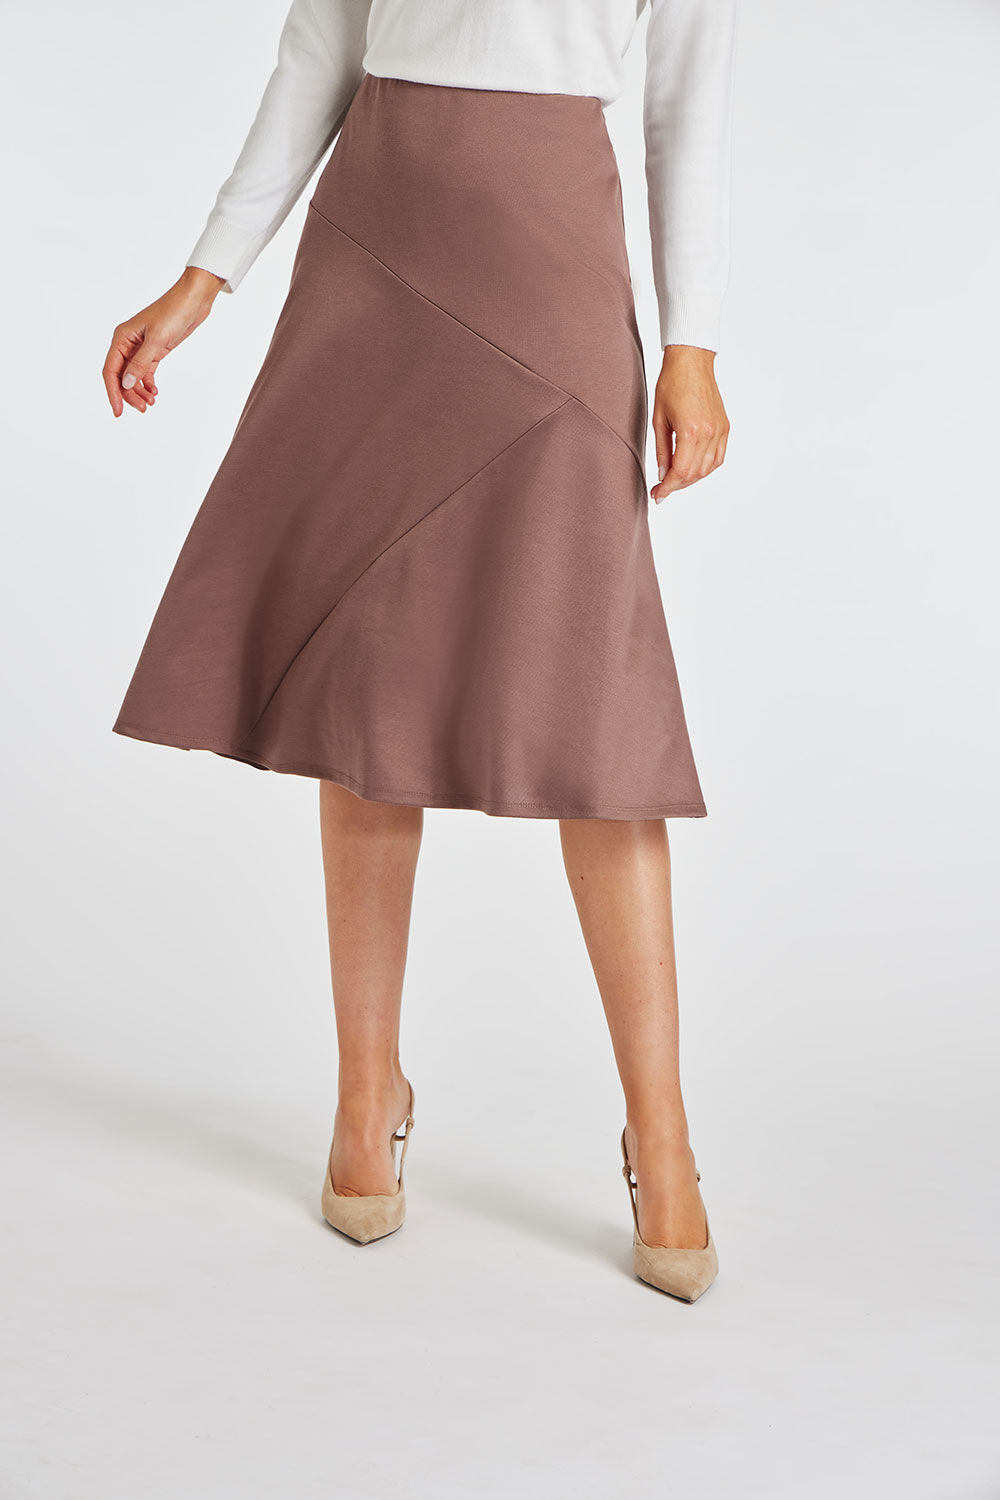 Bonmarche Brown Plain Paneled Elasticated Skirt, Size: 10